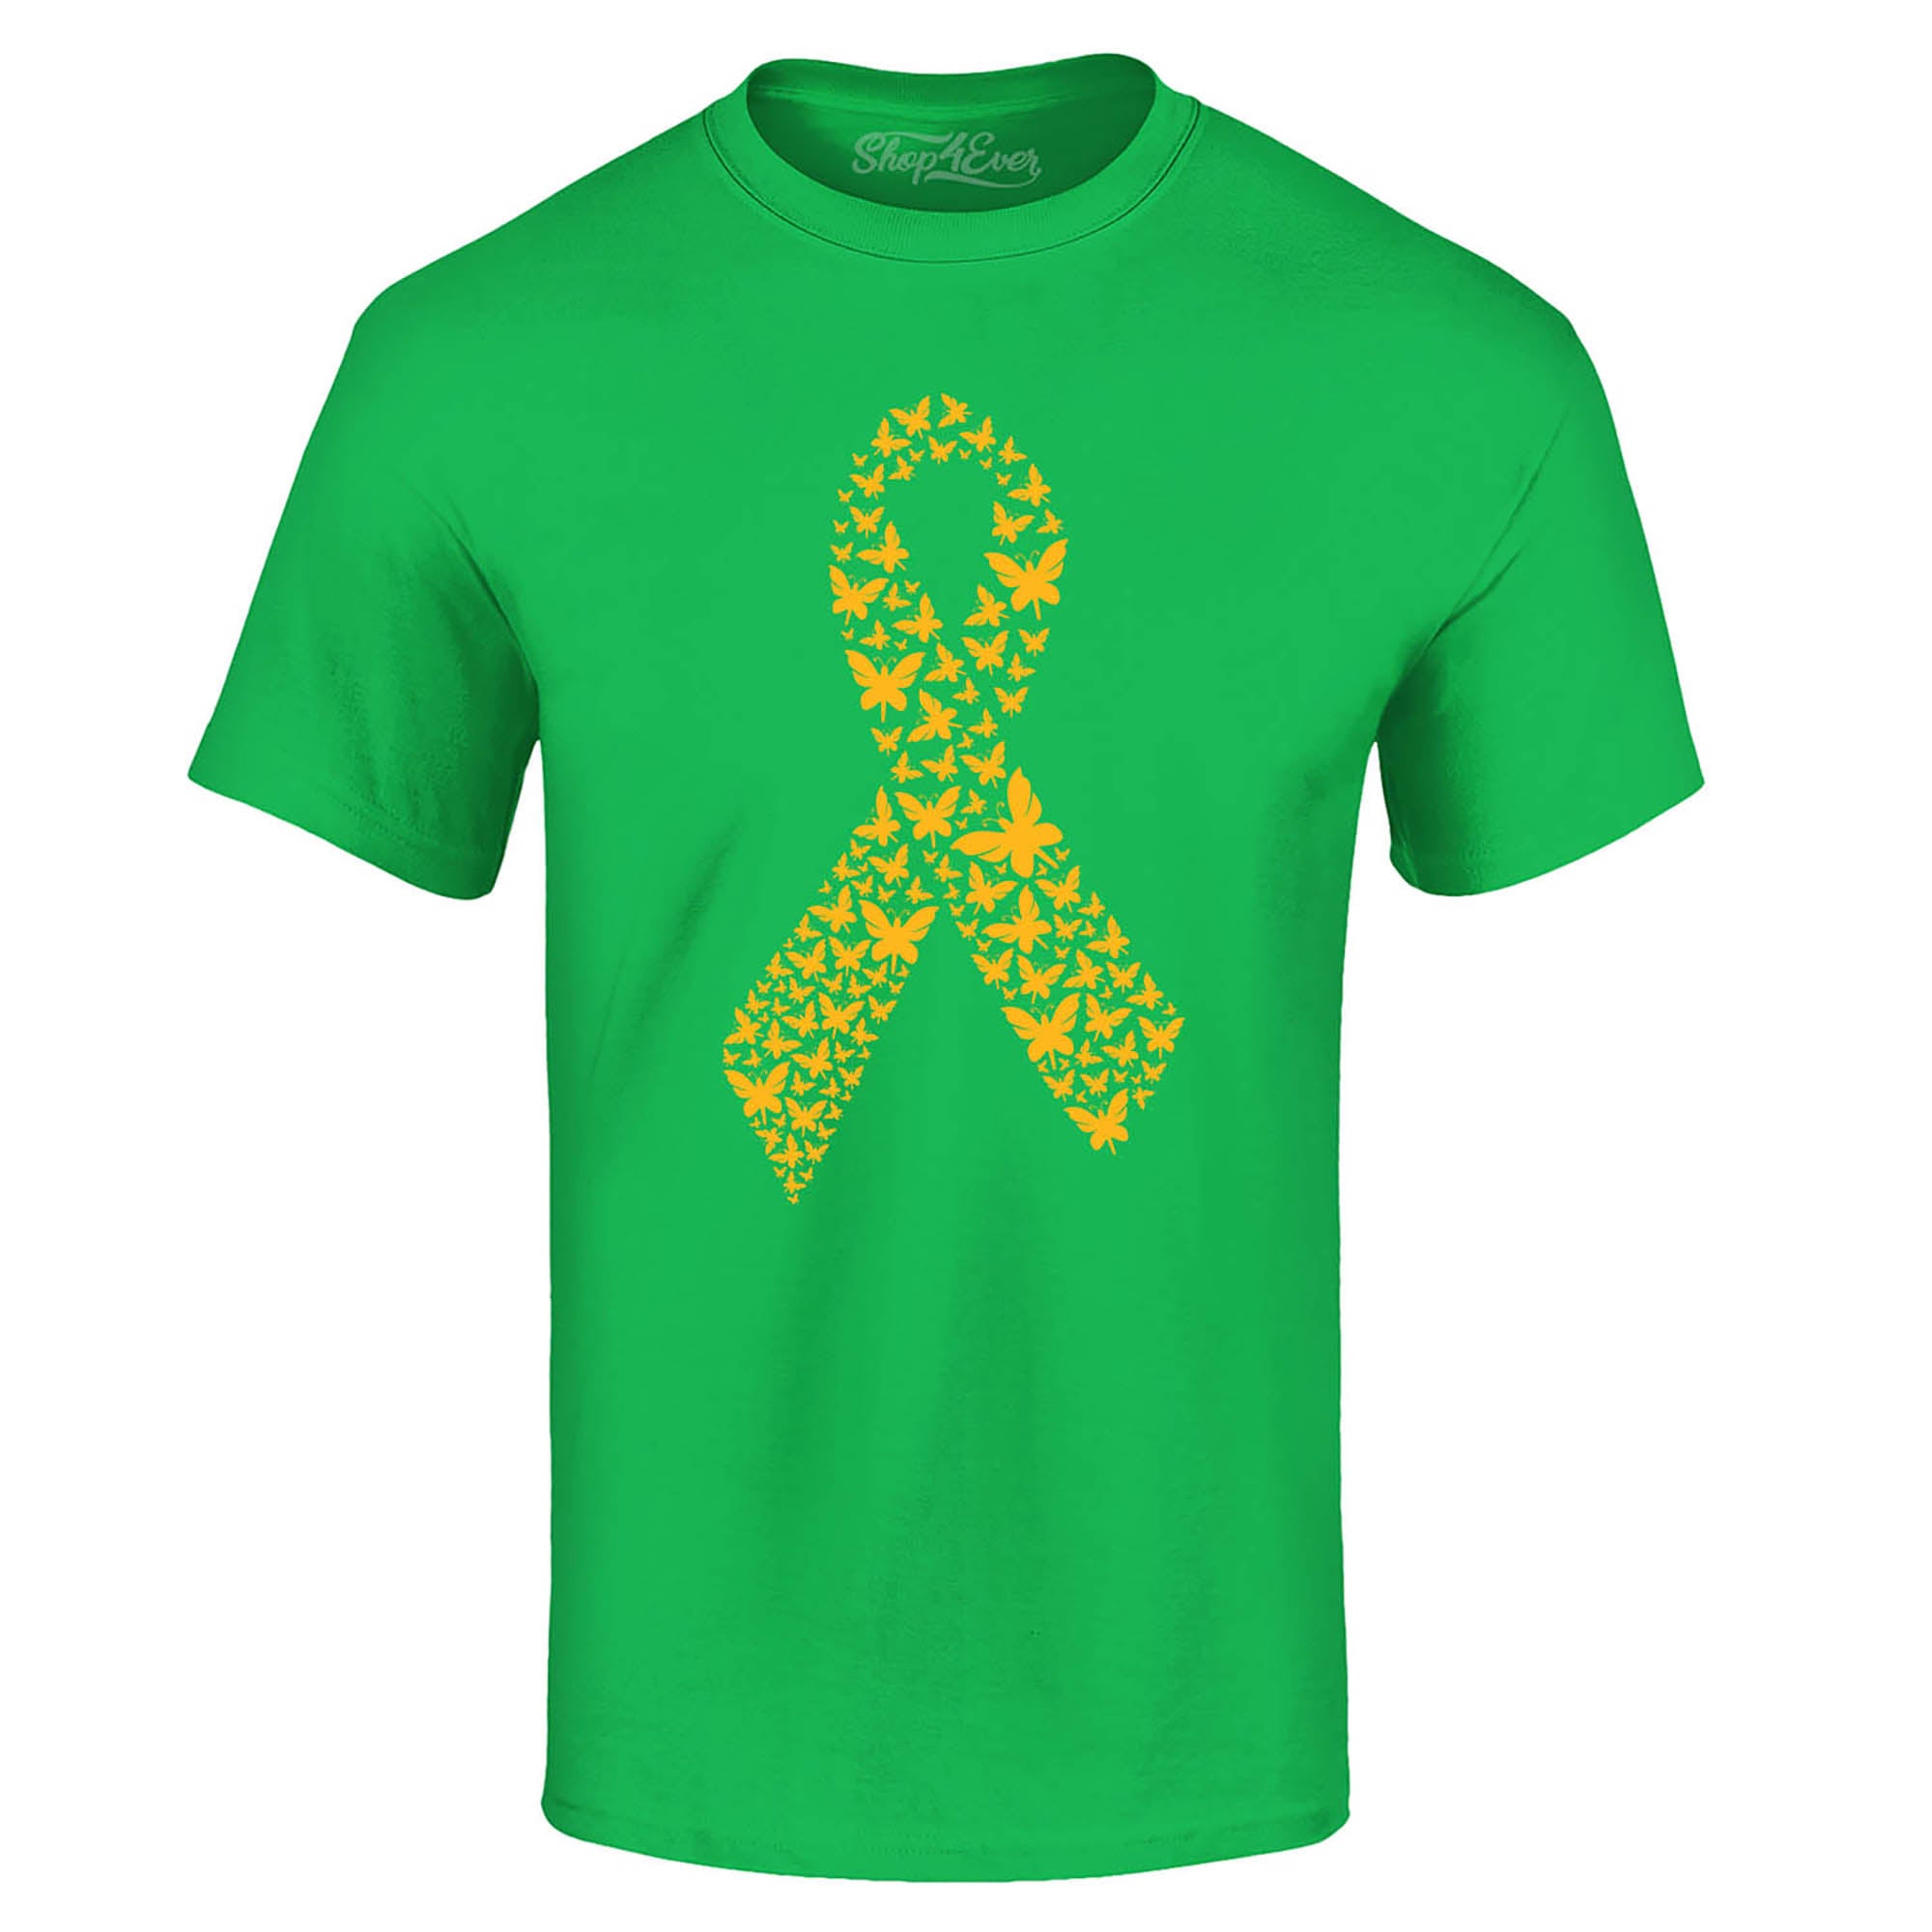 Gold Butterfly Ribbon Childhood Cancer Awareness T-Shirt